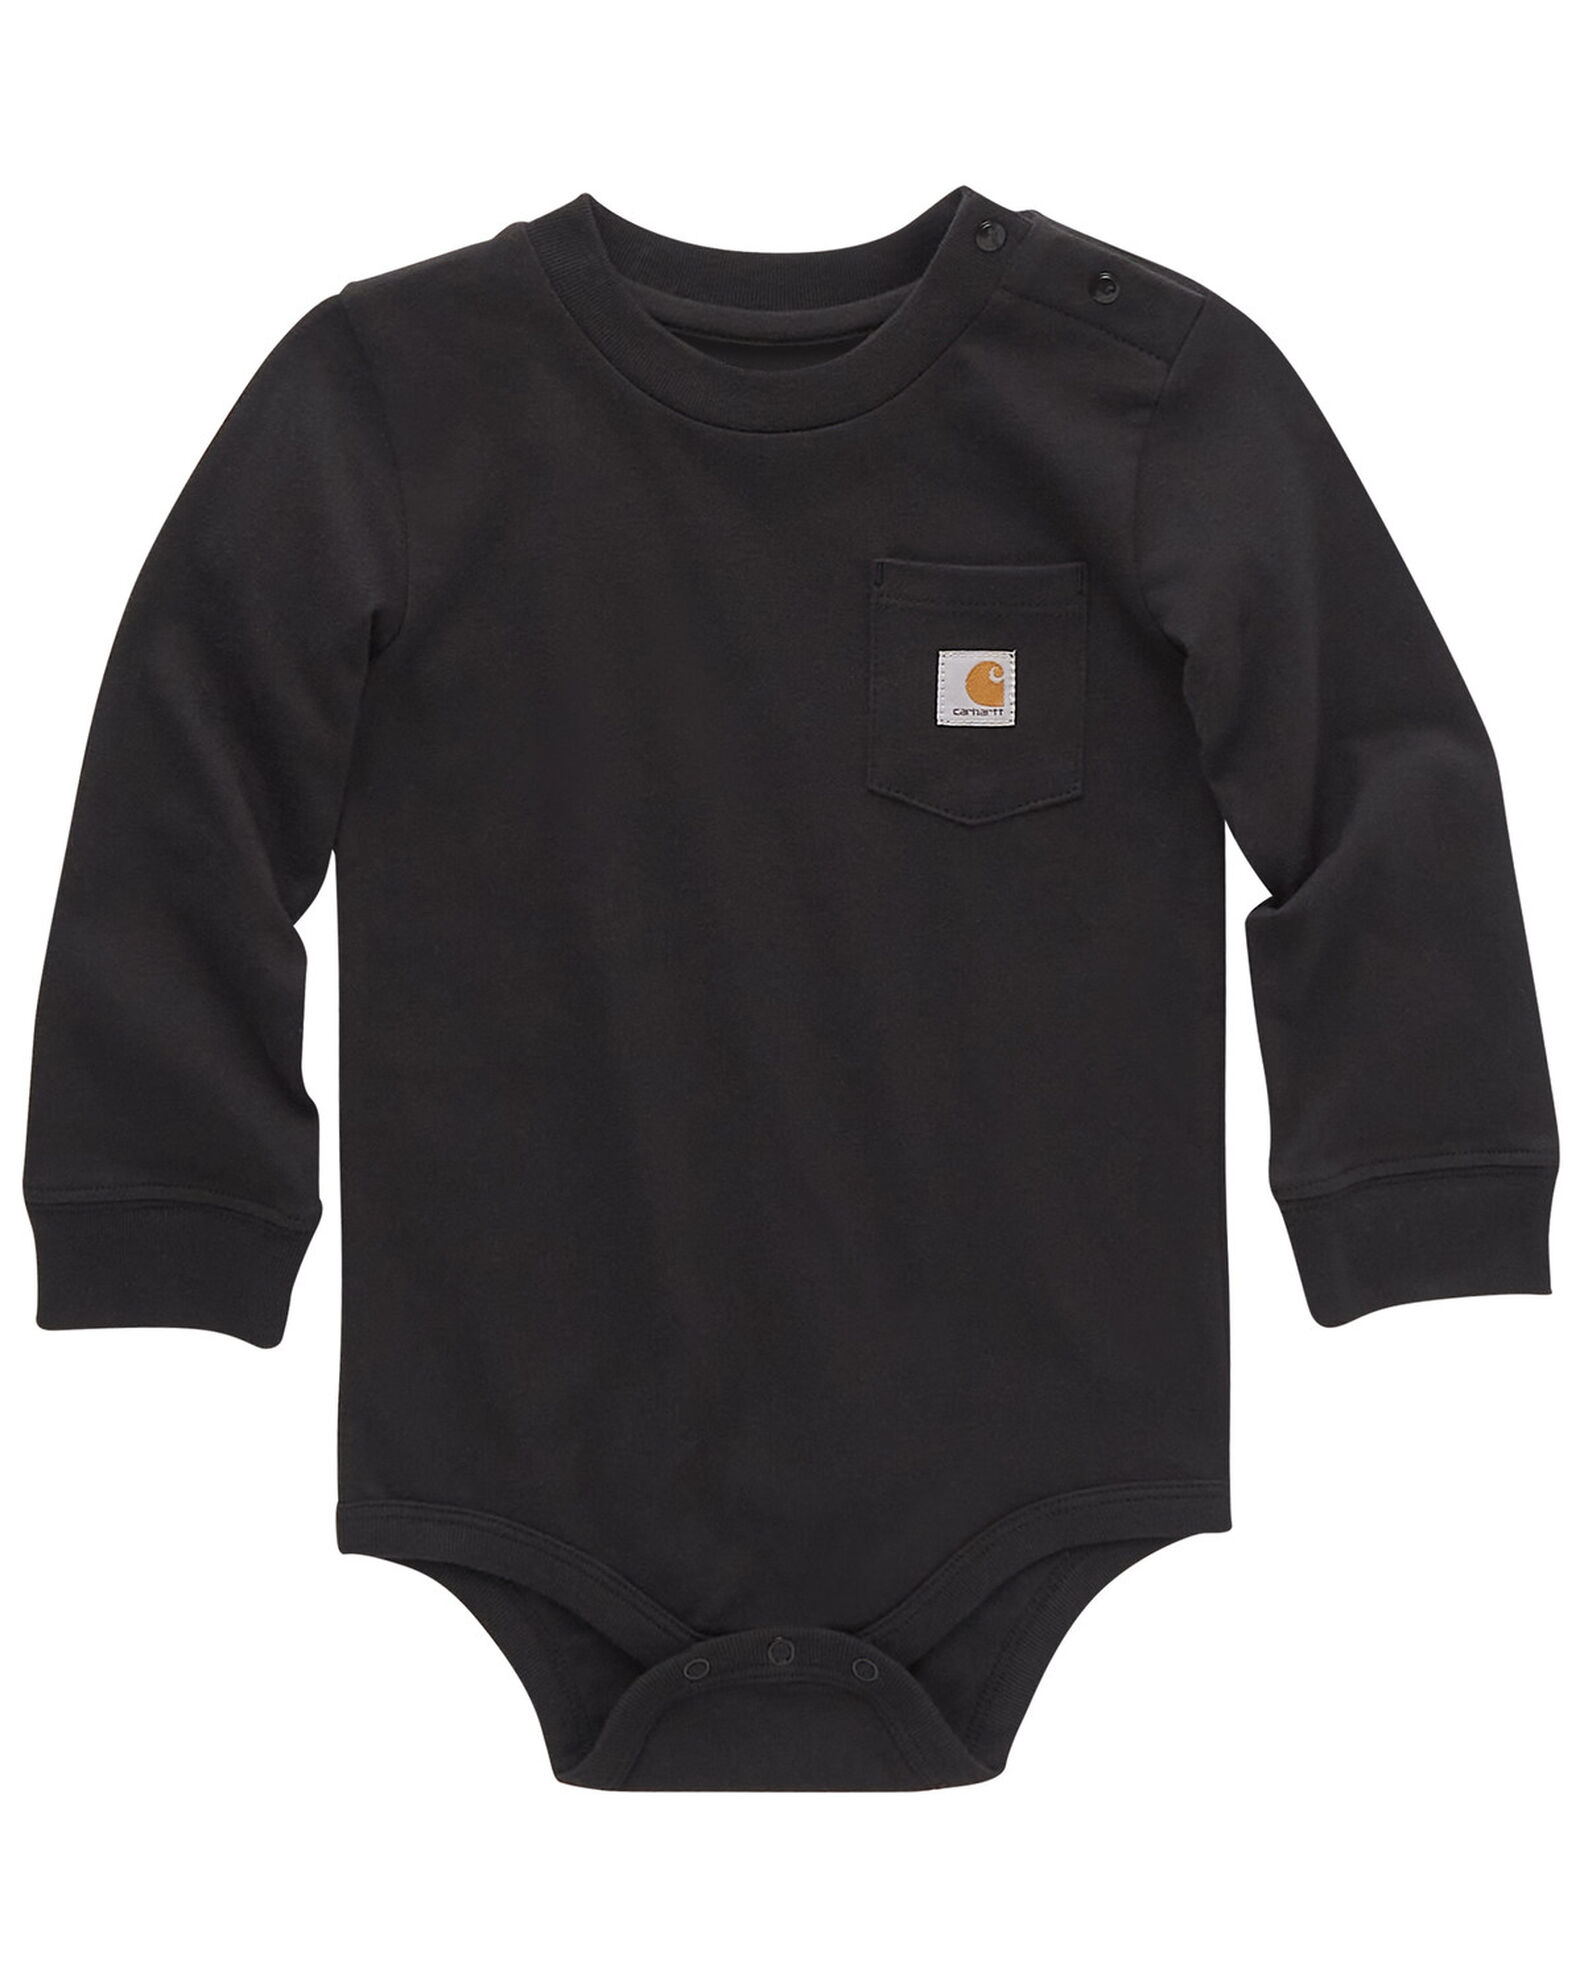 Product Name: Carhartt Infant Boys' Logo Pocket Long Sleeve Onesie